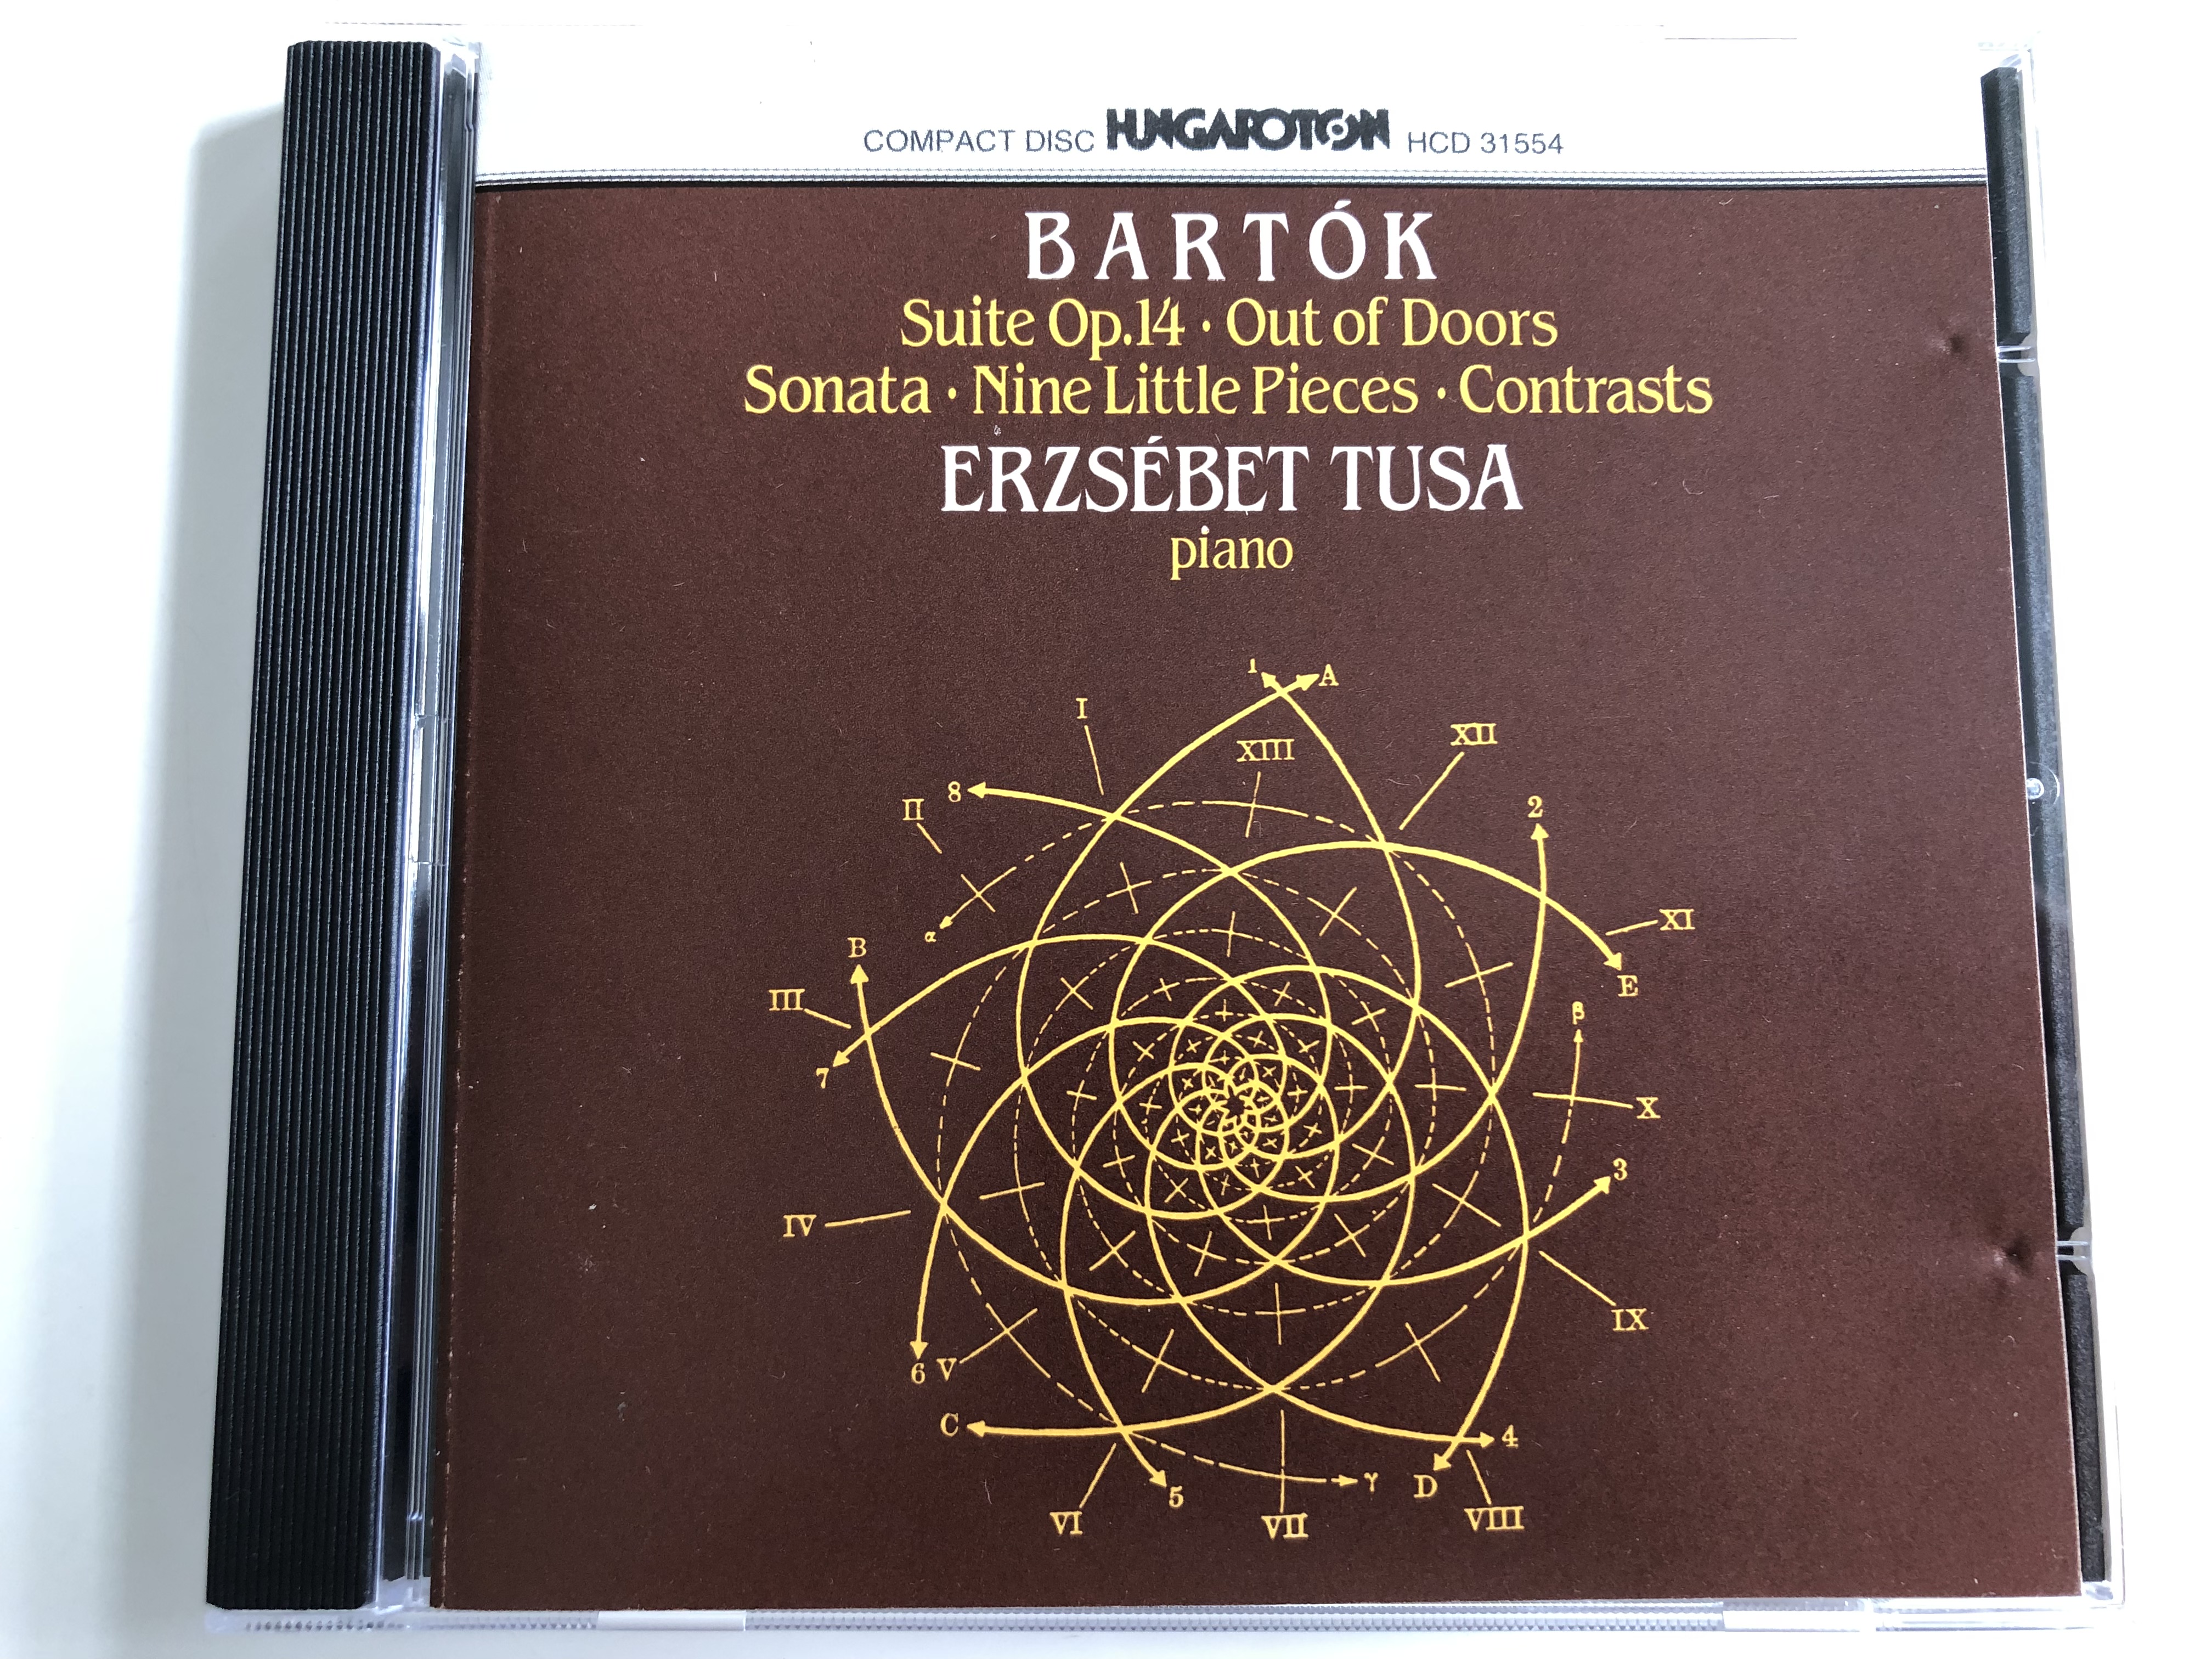 bartok-suite-op.14-out-of-doors-sonata-nine-little-pieces-contrasts-erzsebet-tusa-piano-hungaroton-audio-cd-1993-stereo-hcd-31554-1-.jpg